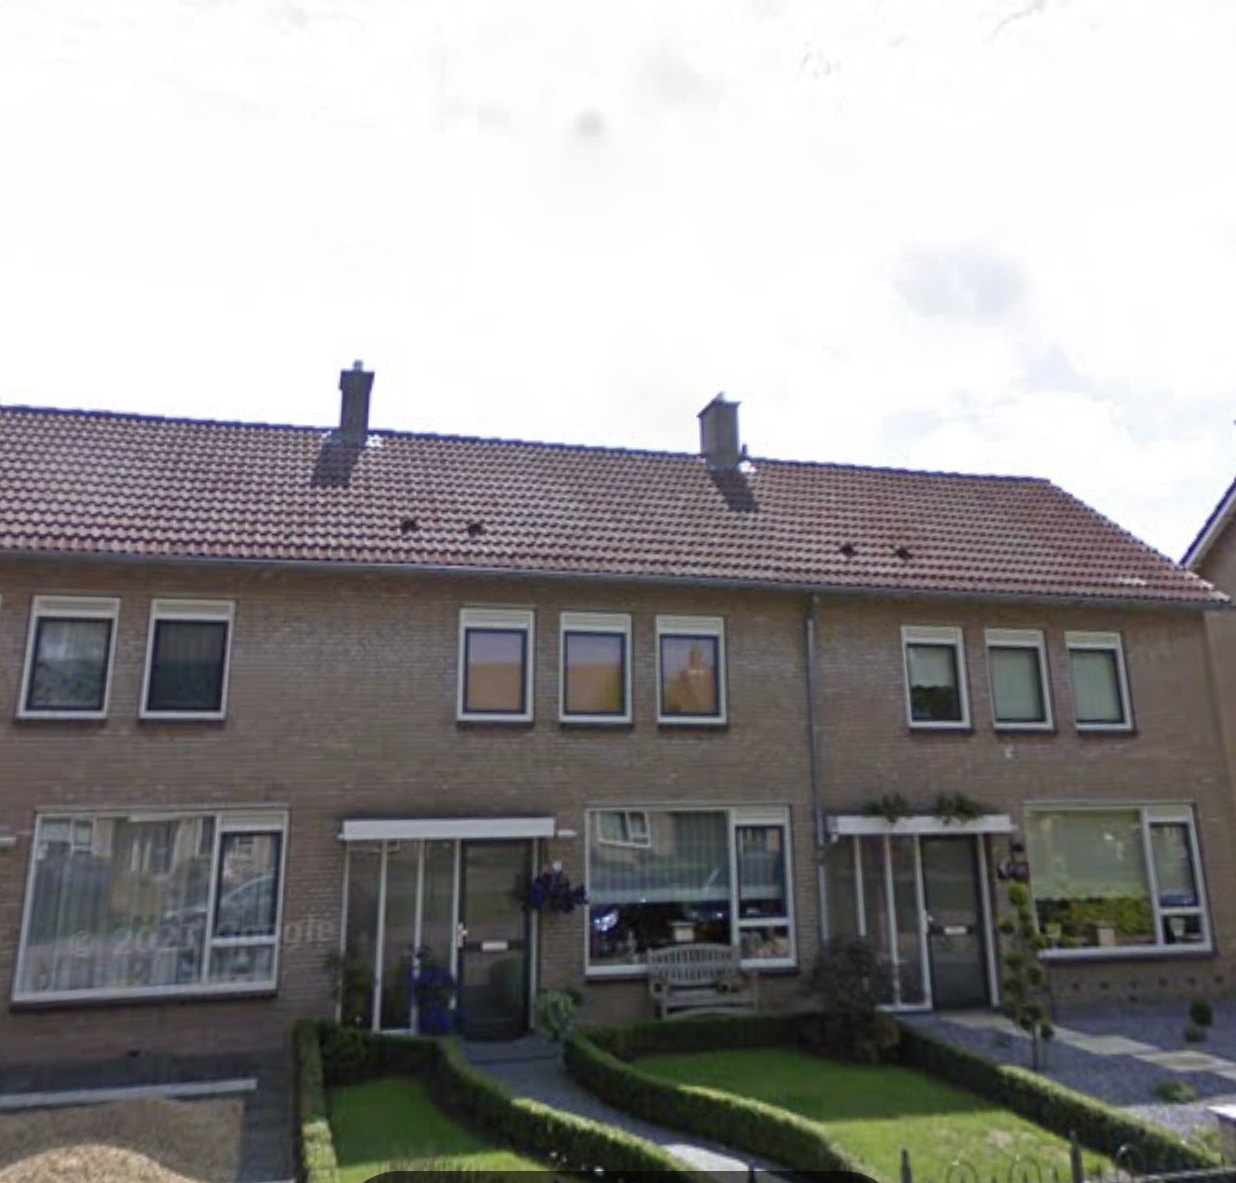 Willem Alexanderstraat 3, 4751 BA Oud Gastel, Nederland